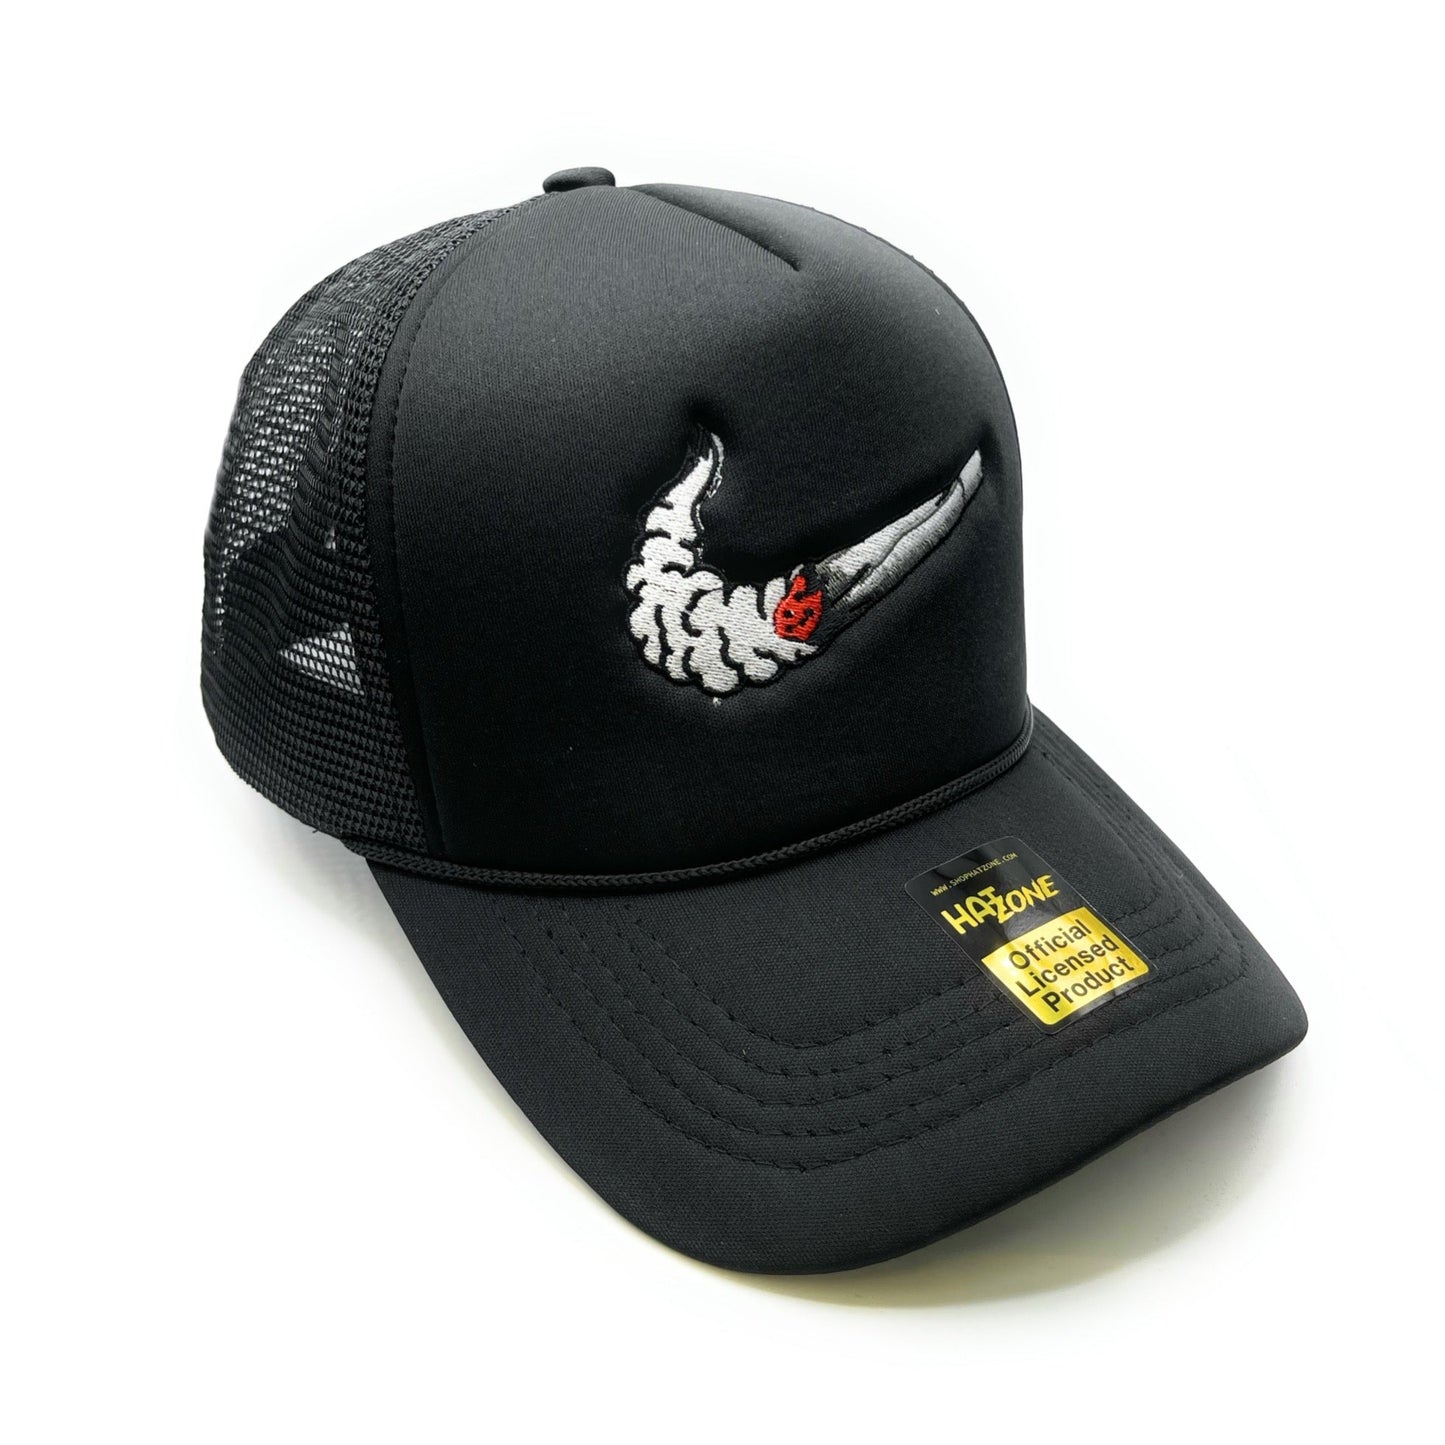 Smoke Mesh Trucker Snapback (Black) - Hat Supreme